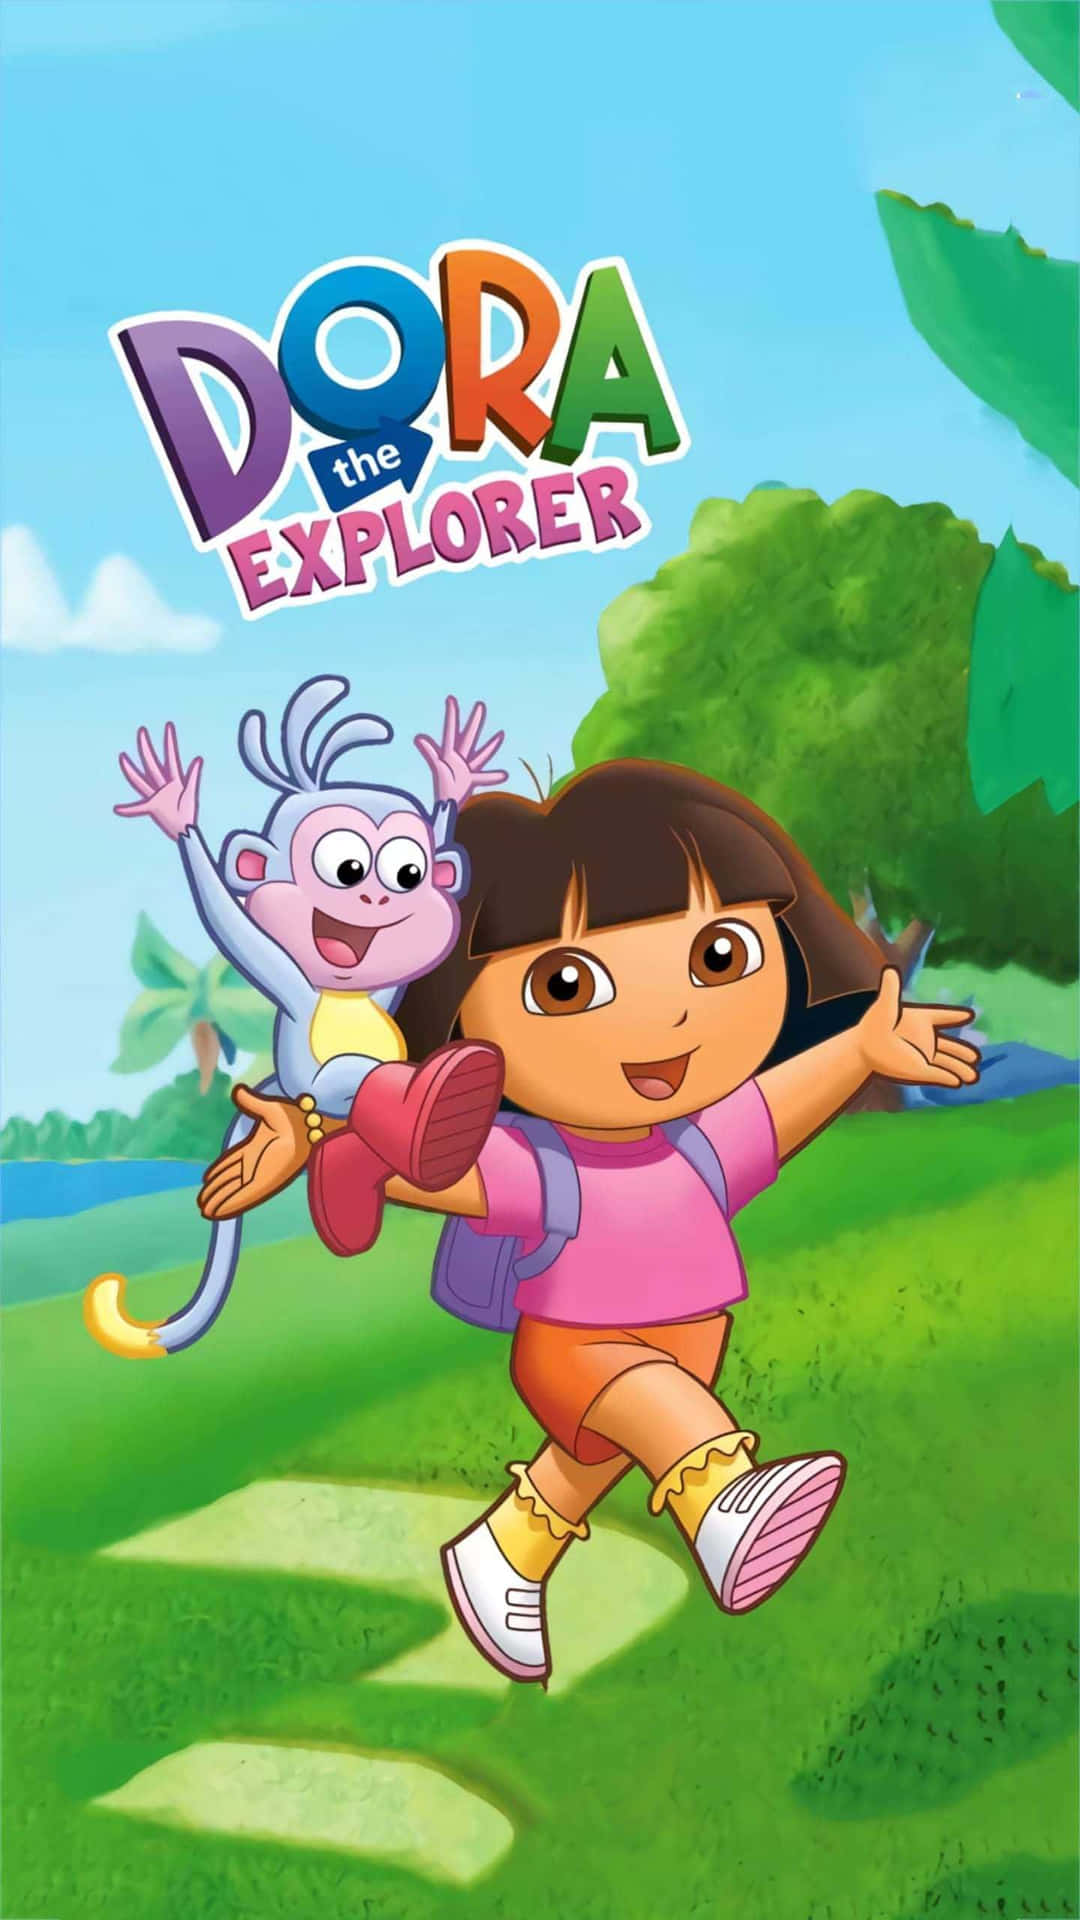 Happy Little Explorer, Dora!